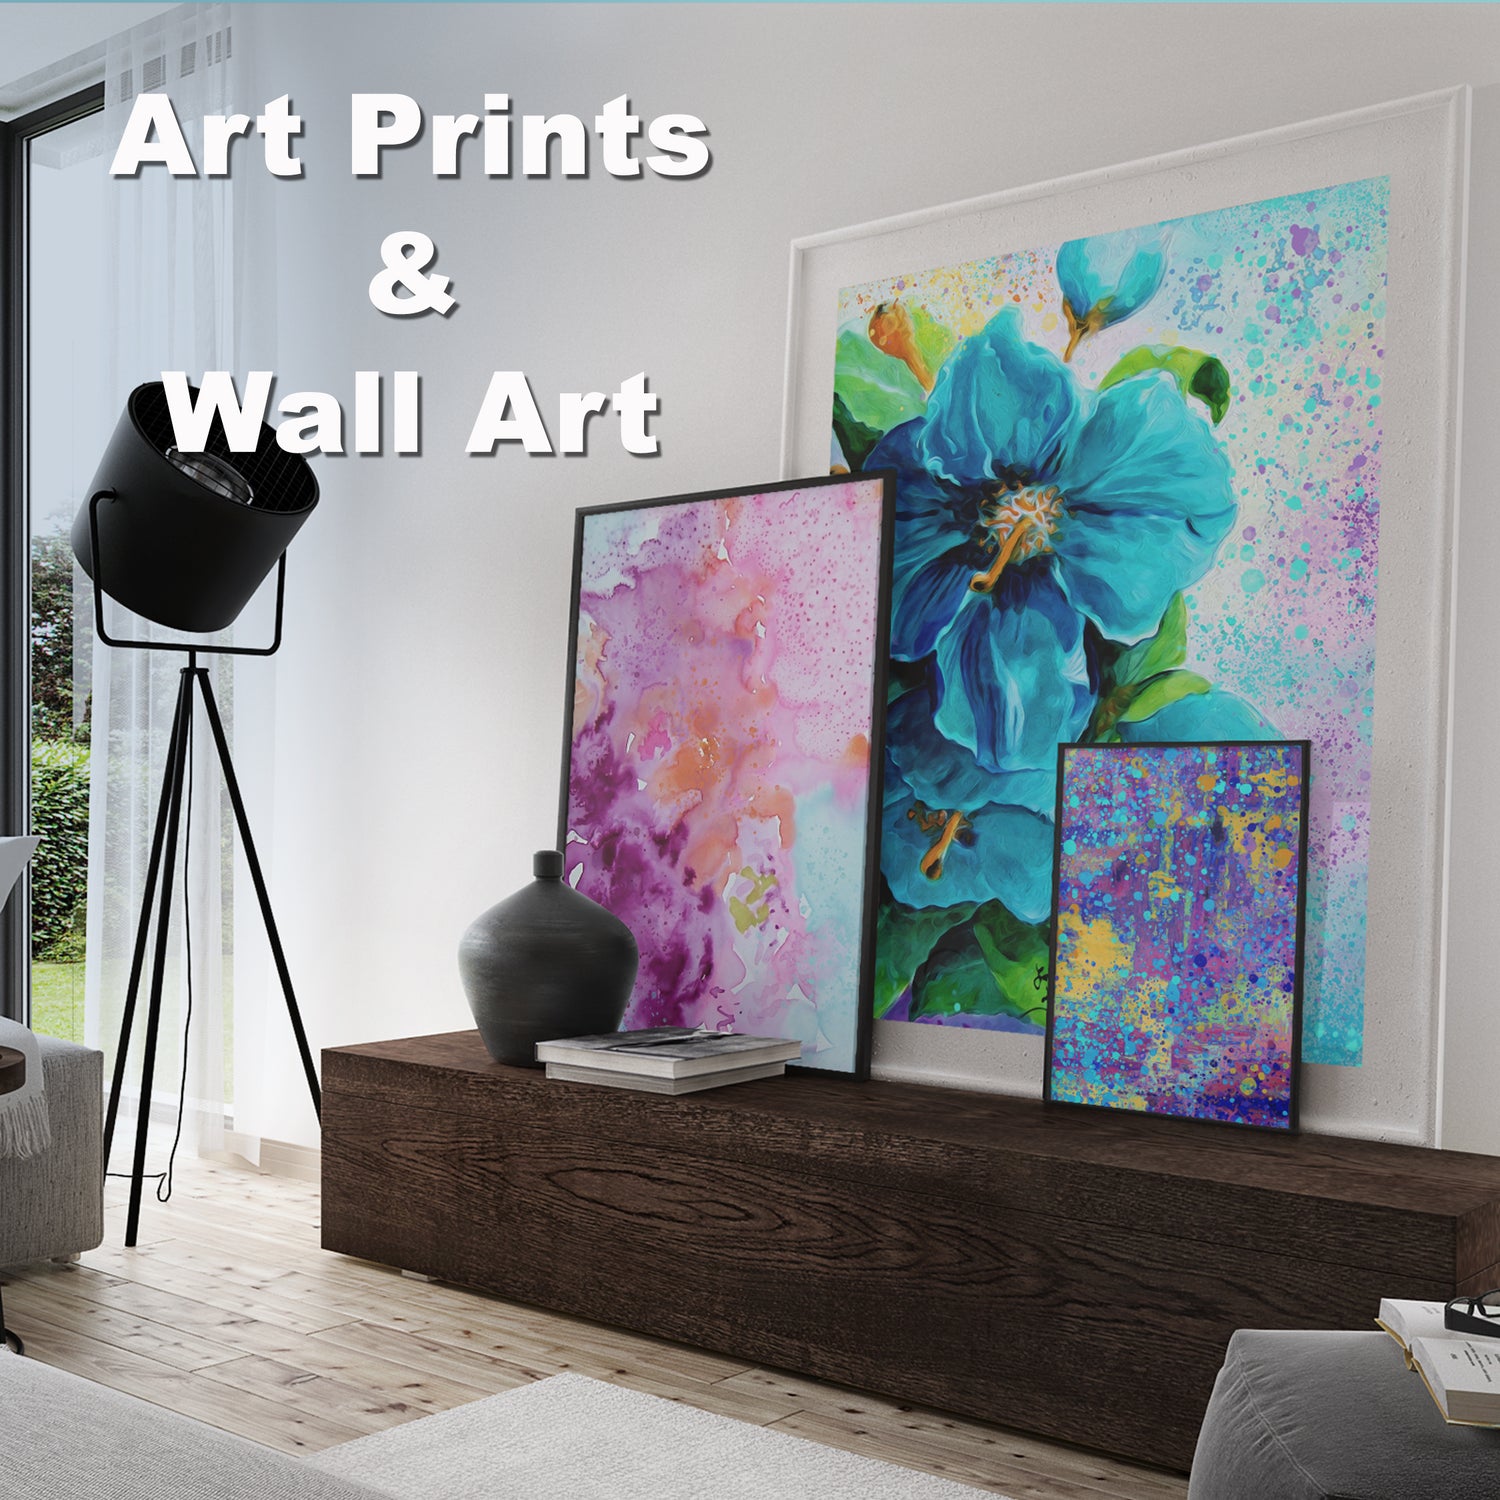 Art Prints & Wall Art